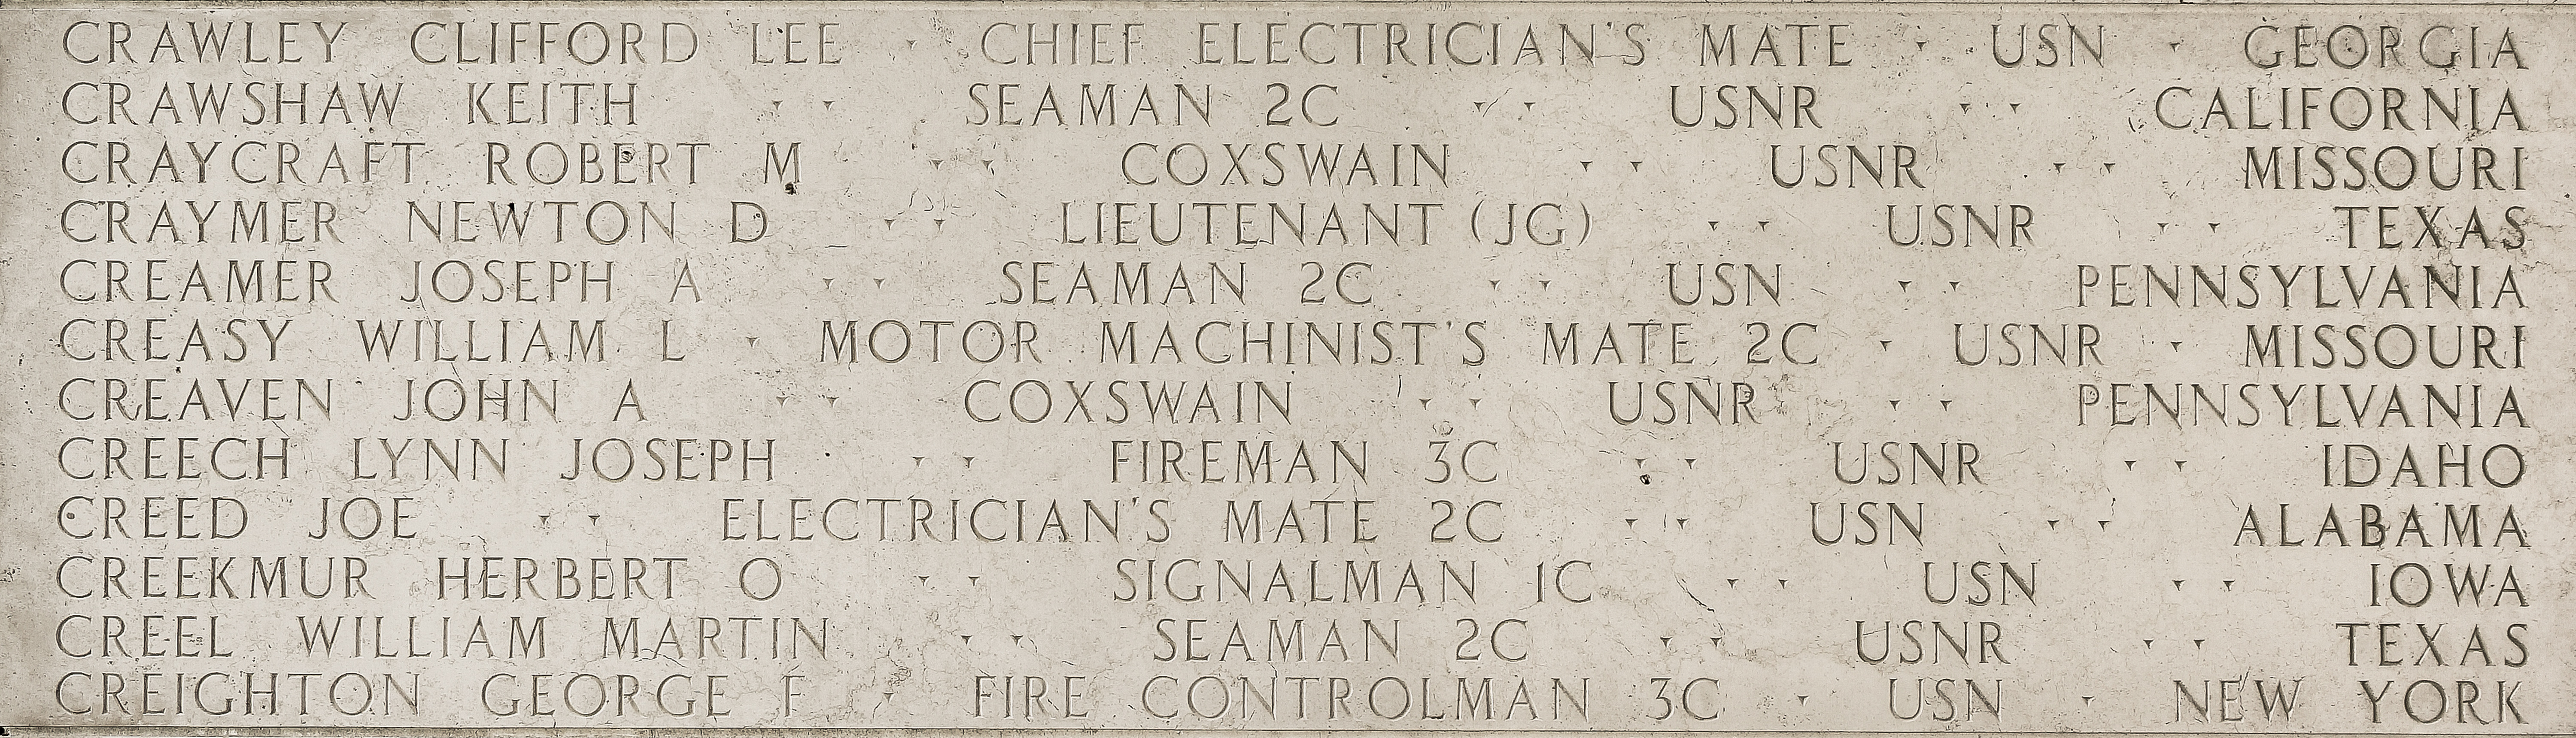 George F. Creighton, Fire Controlman Third Class